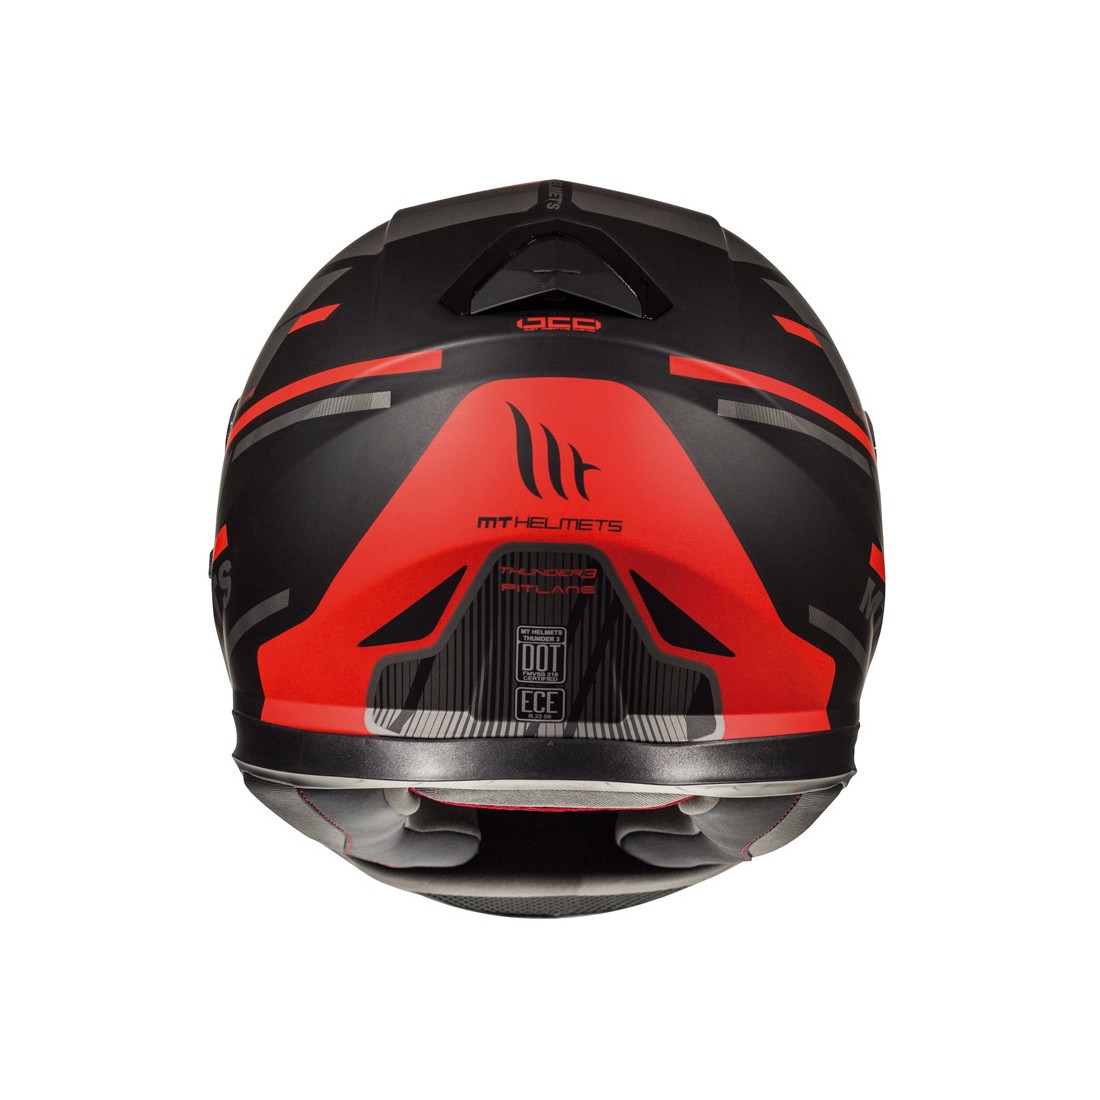 Funda Casco Integral Moto Serpiente Pitón - Gris/Rojo - Helmet